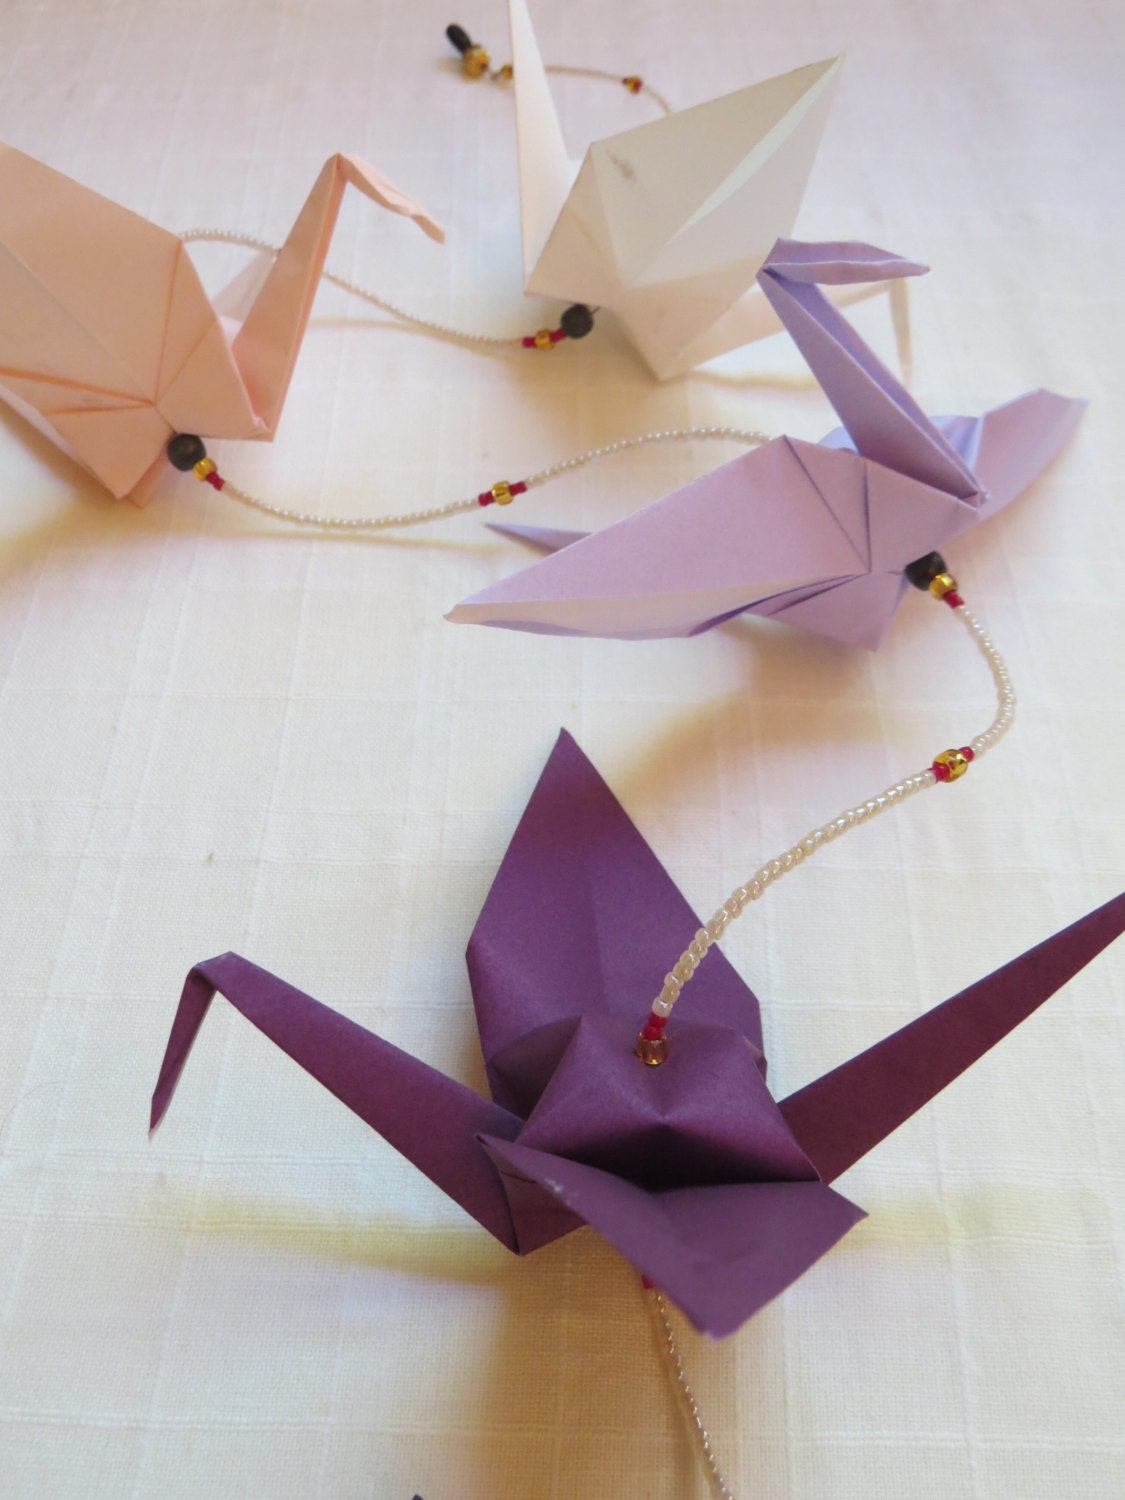 Beaded Origami Crane Chain//Crane Chain//Paper Crane//Origami